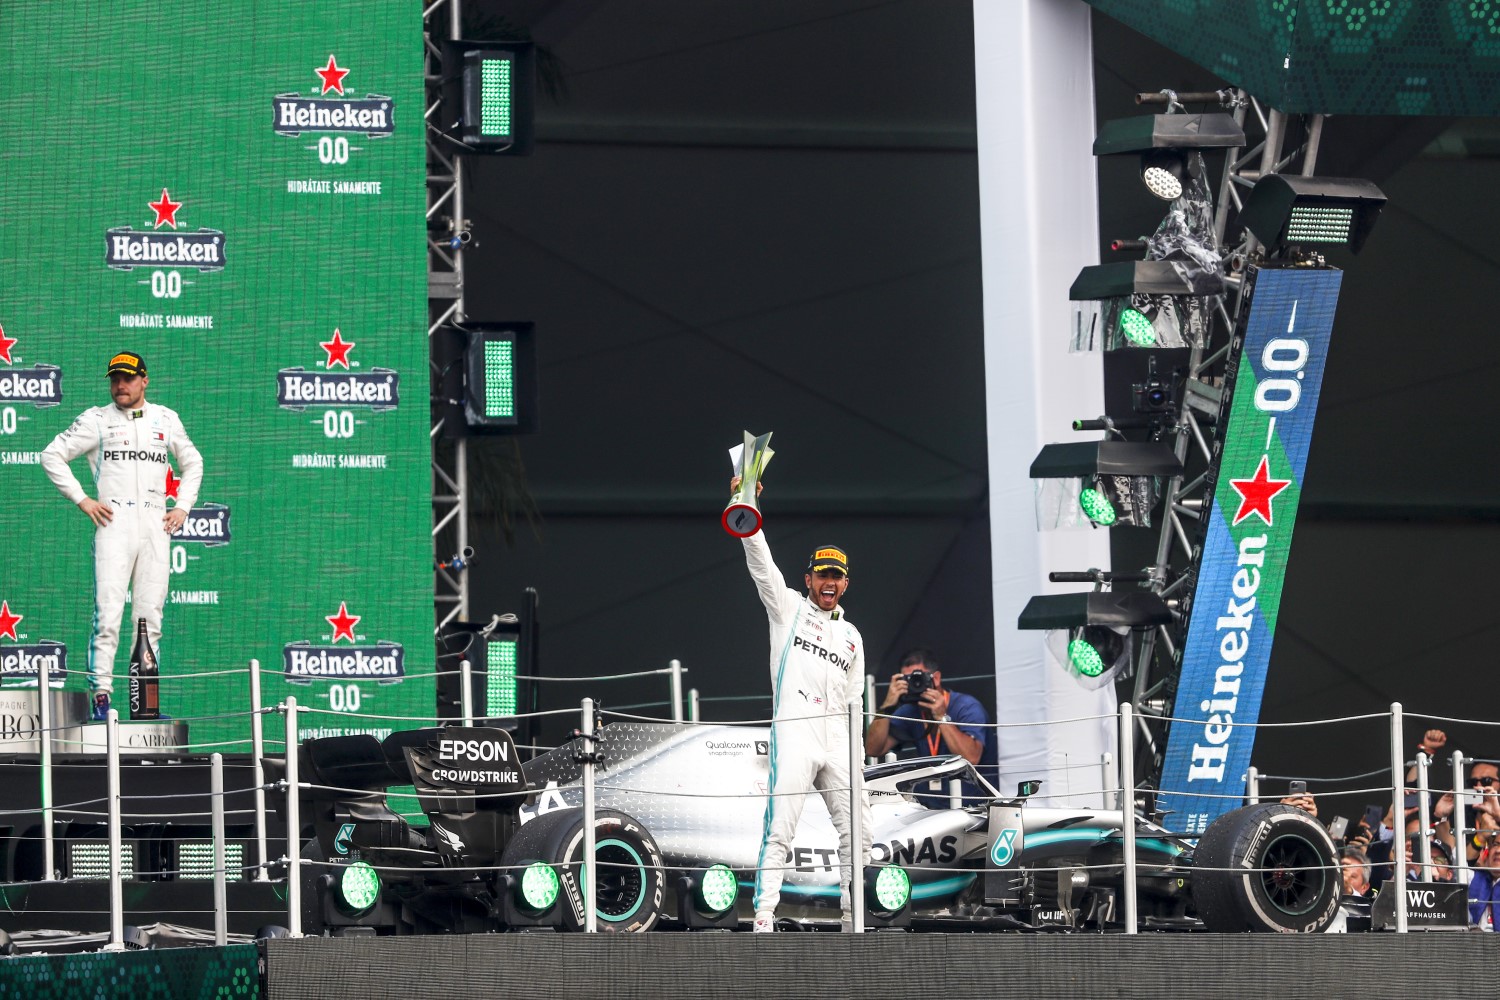 Hamilton enjoys the podium celebration